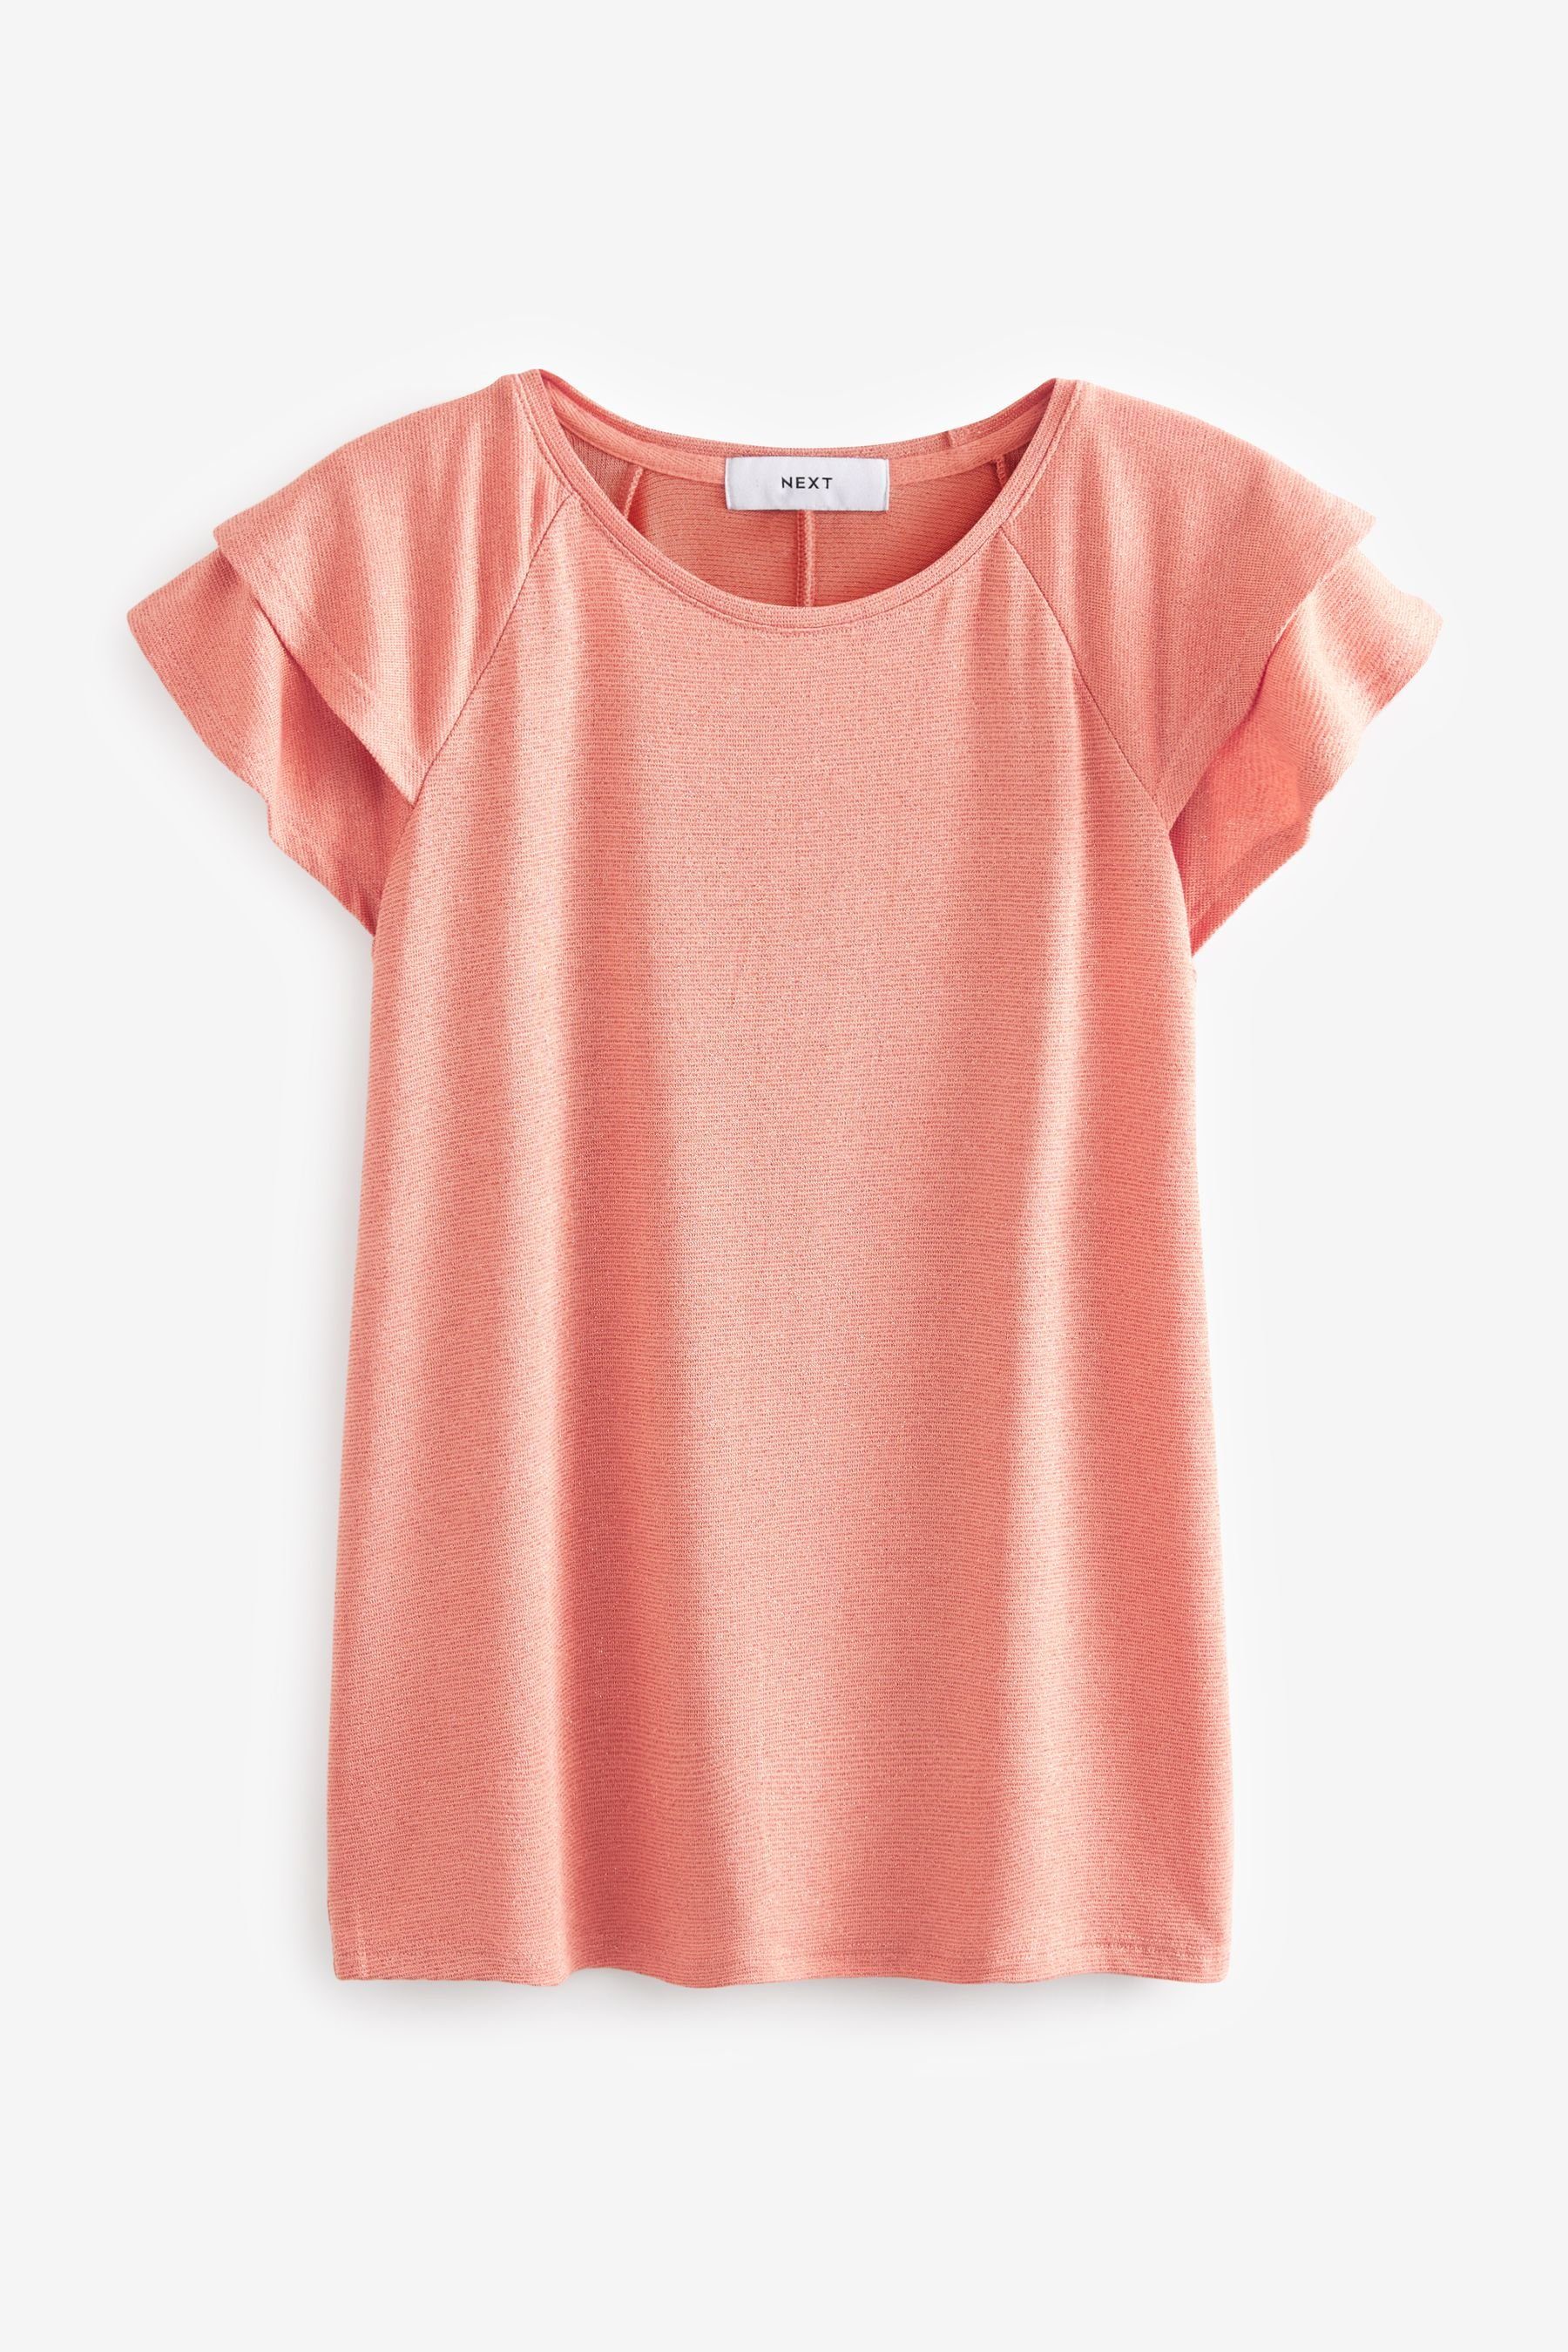 Next T-Shirt kurzen Flatterärmeln (1-tlg) T-Shirt Coral U-Ausschnitt Pink und mit